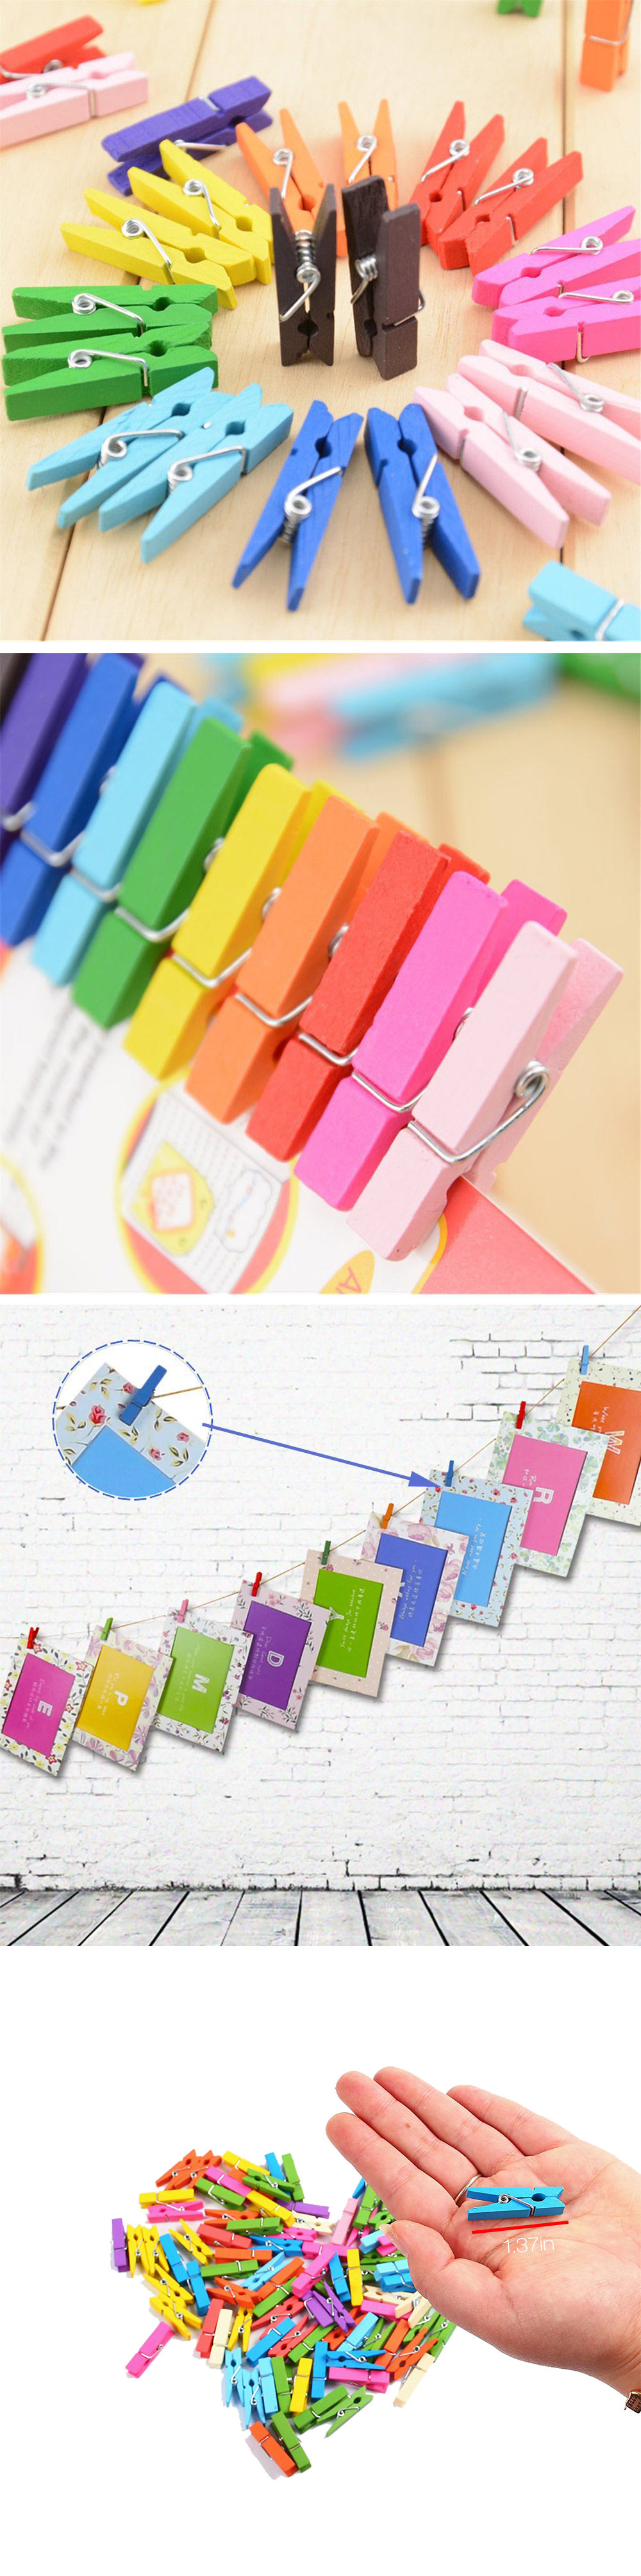 Honana-HN-CH011-10pcs-Colorful-Wodden-Clothespins-Durable-Photo-Paper-Peg-Pin-Craft-Clips-1164885